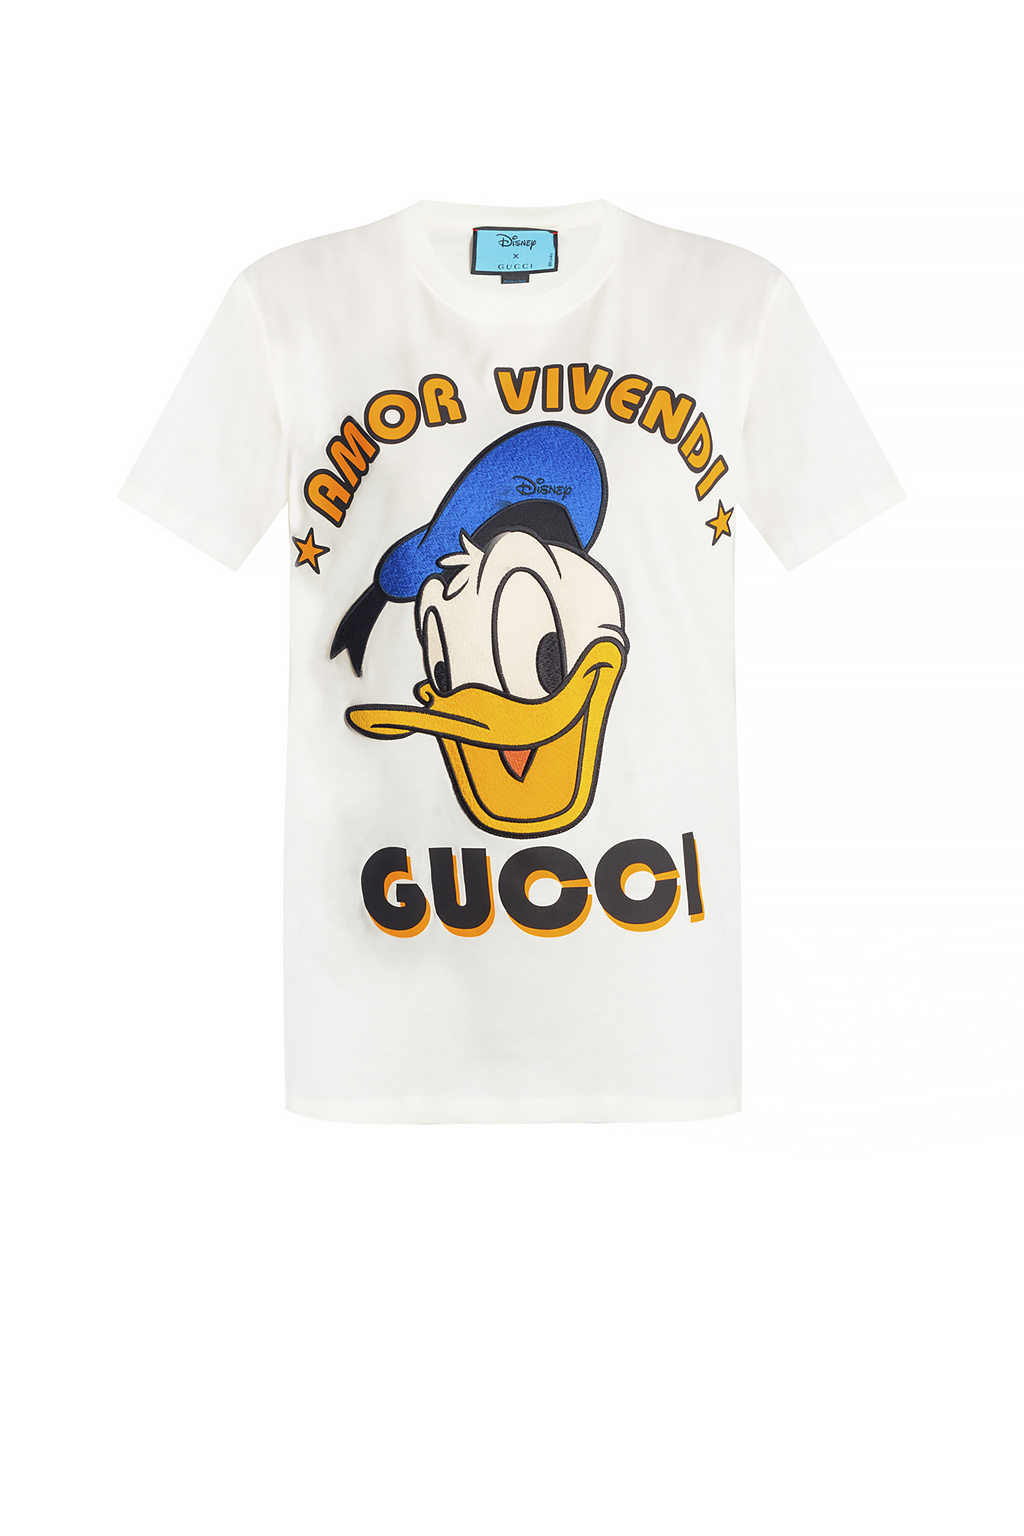 GUCCI NEW Donald Duck Disney X Gucci Pink T-Shirt Size M